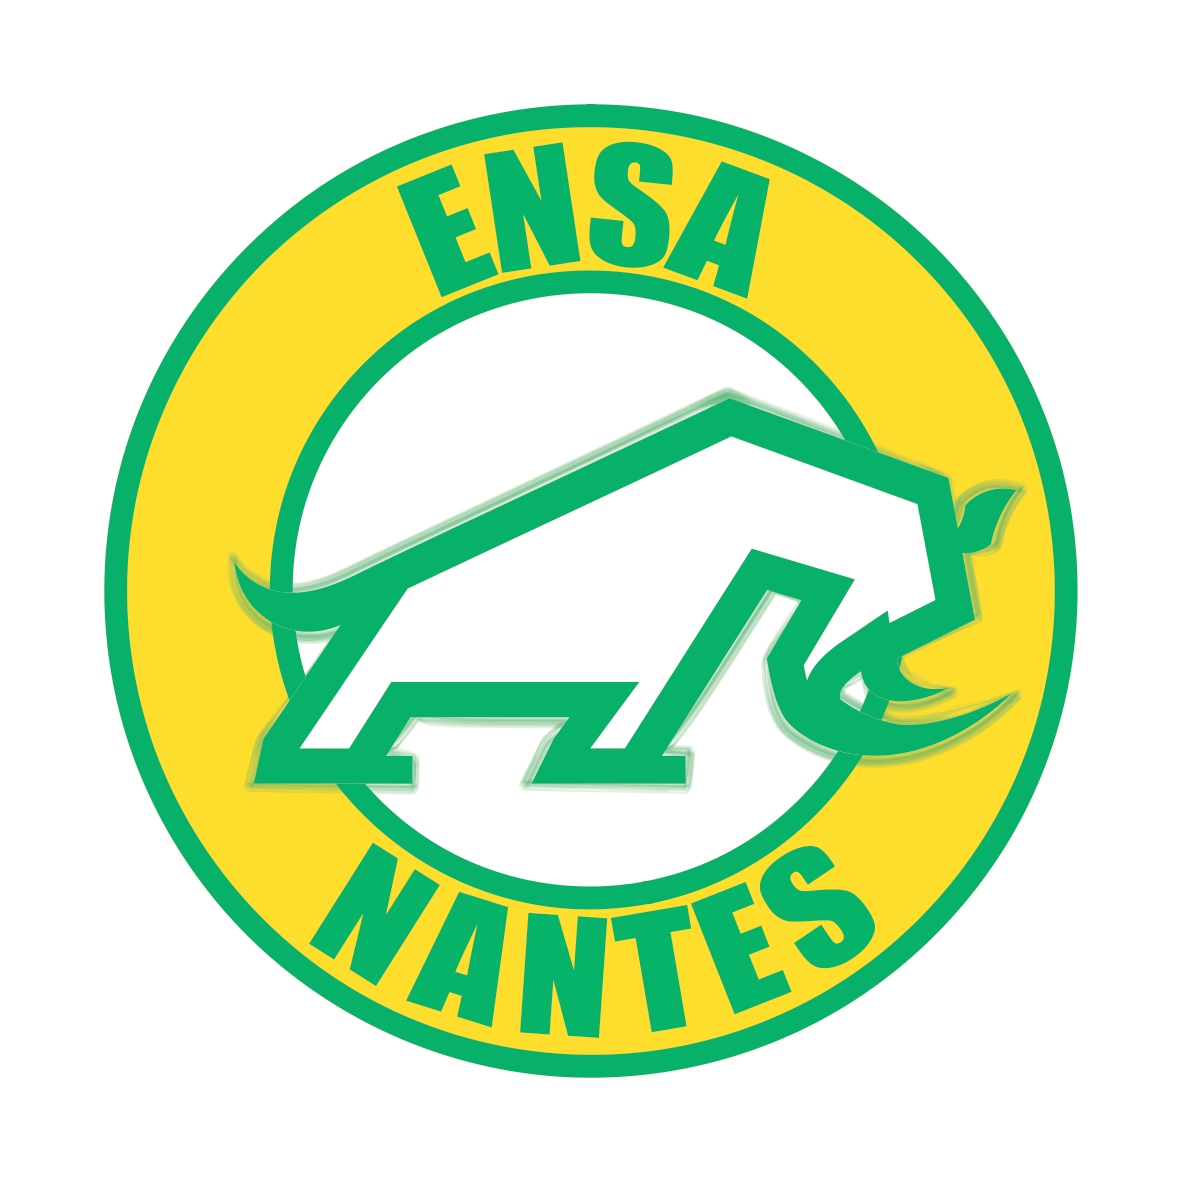 Association Sportive Ensa Nantes